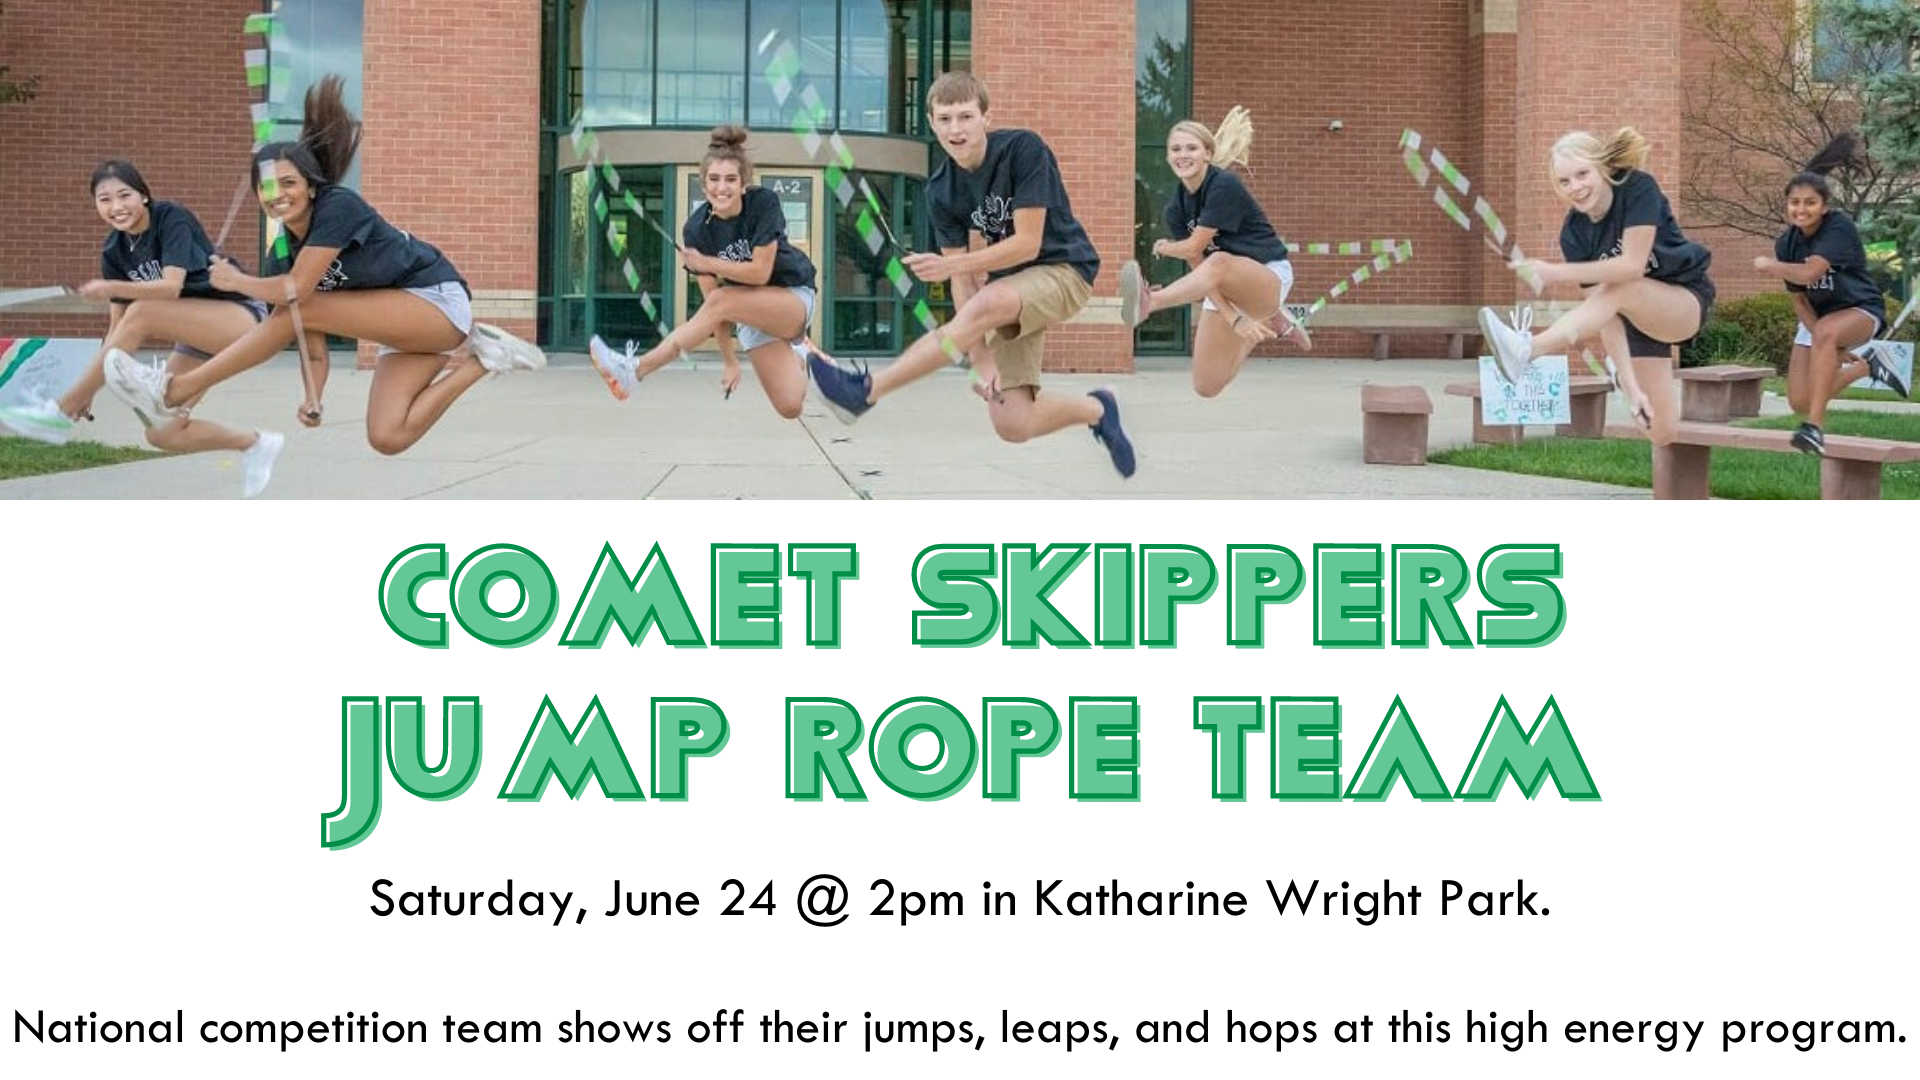 Comet Skippers team jumping rope